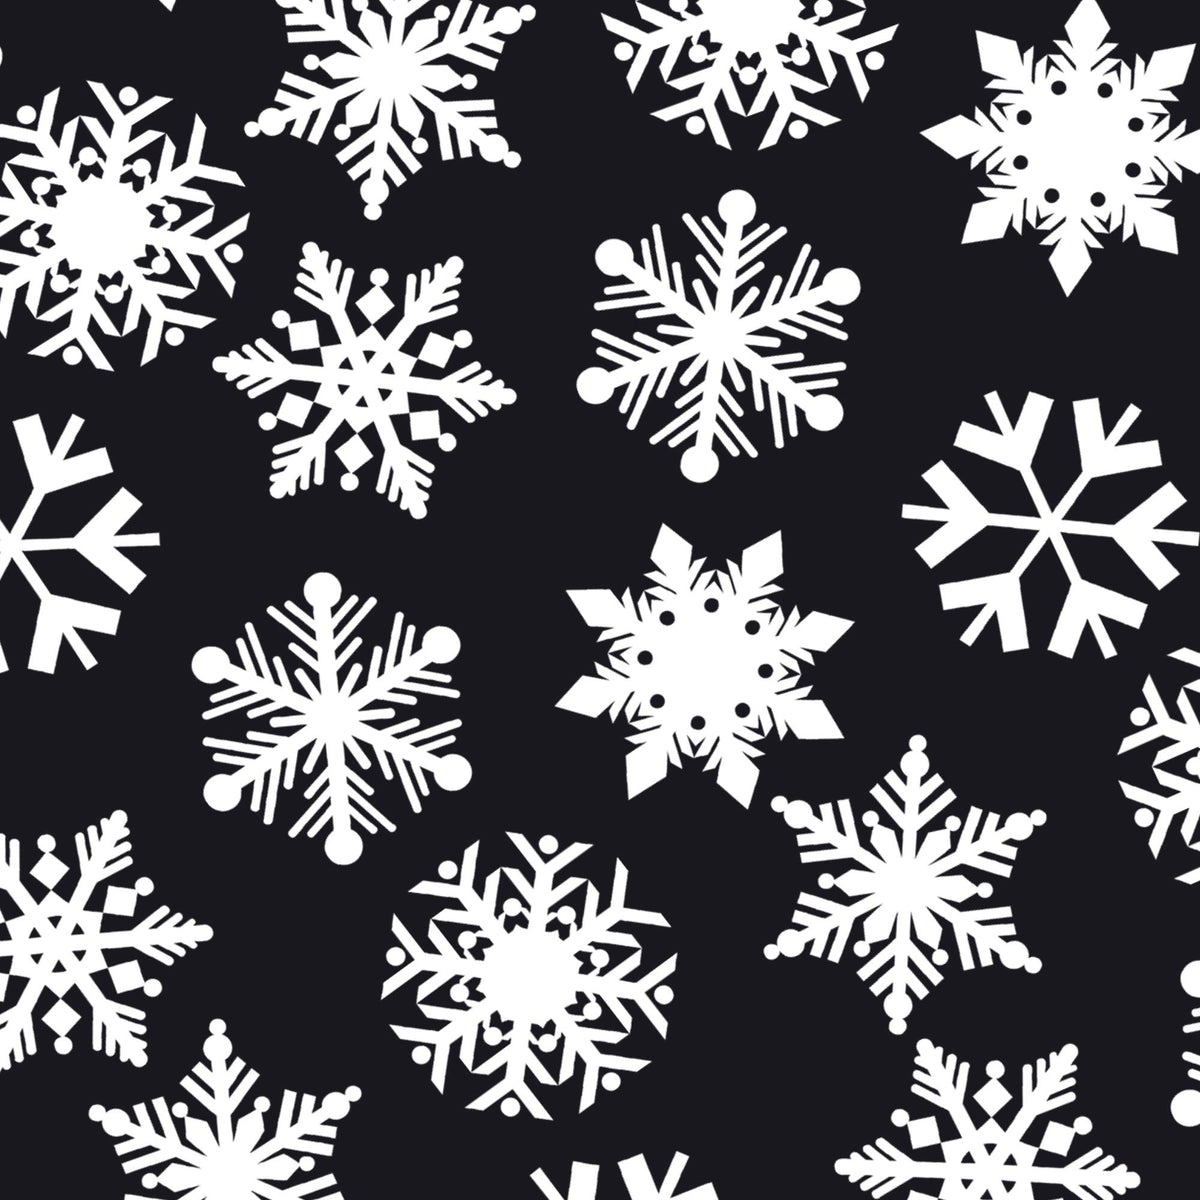 Snowflake Window Stickers: Mega Pack 2 Snowflakes